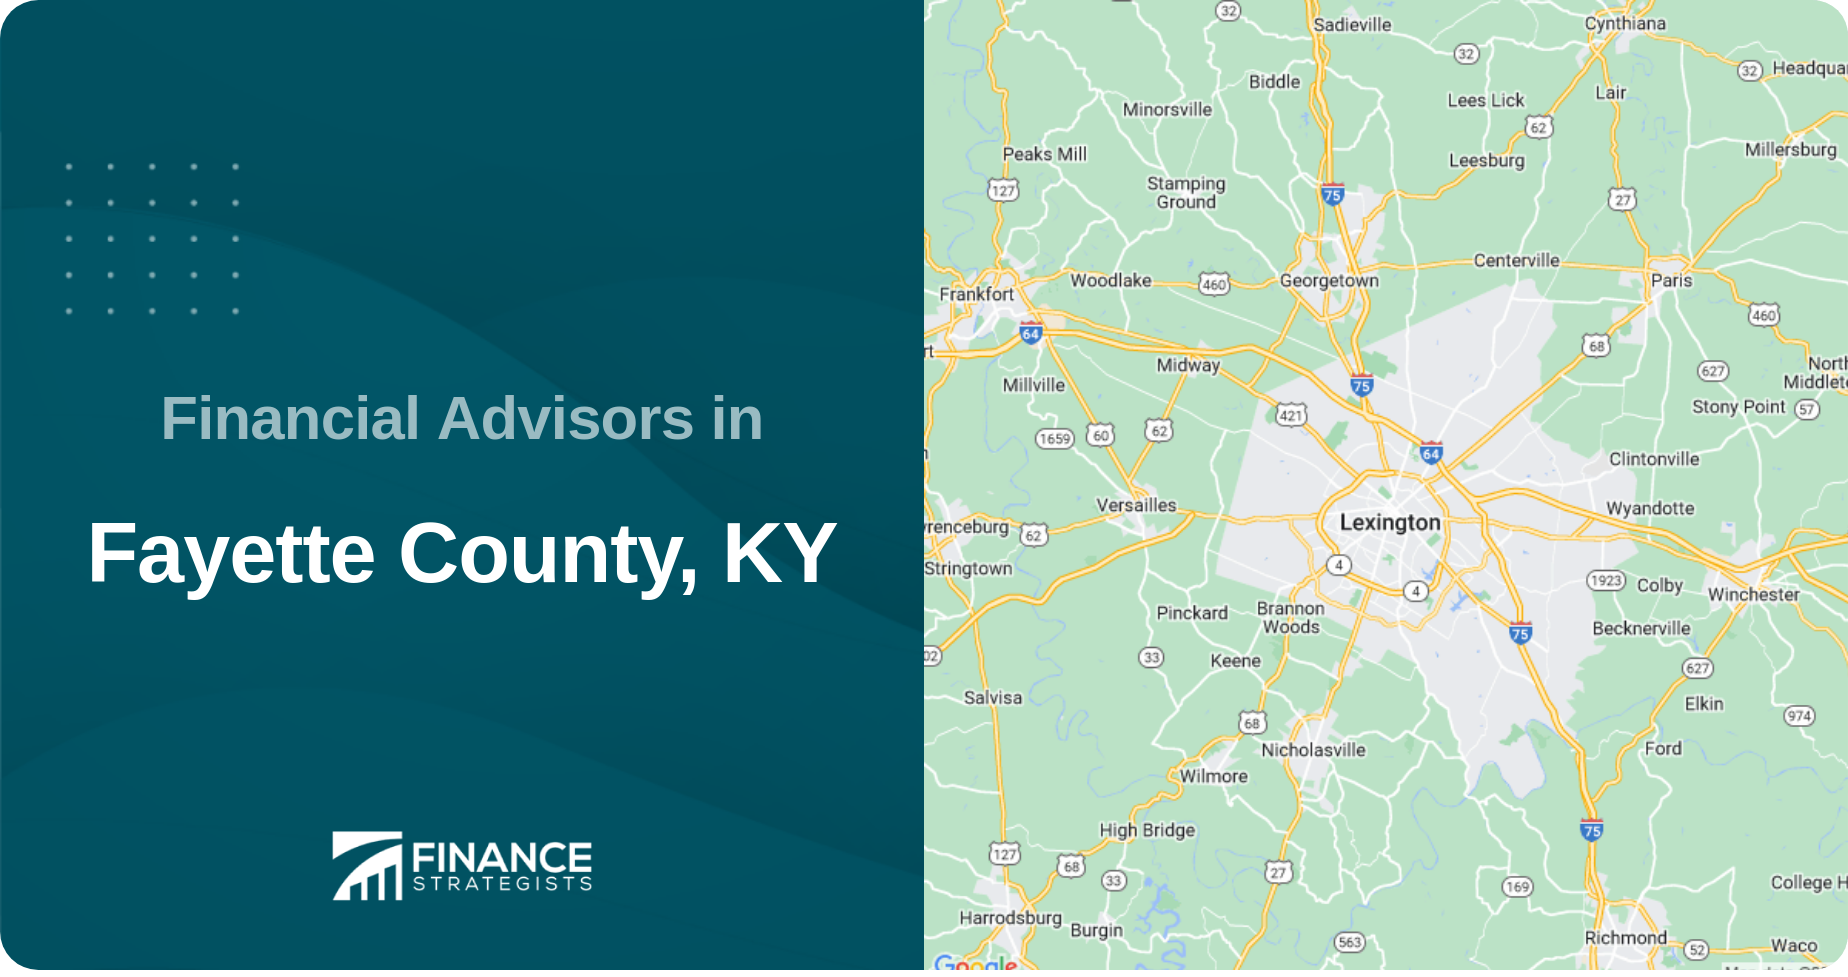 Financial Advisors in Fayette County, KY